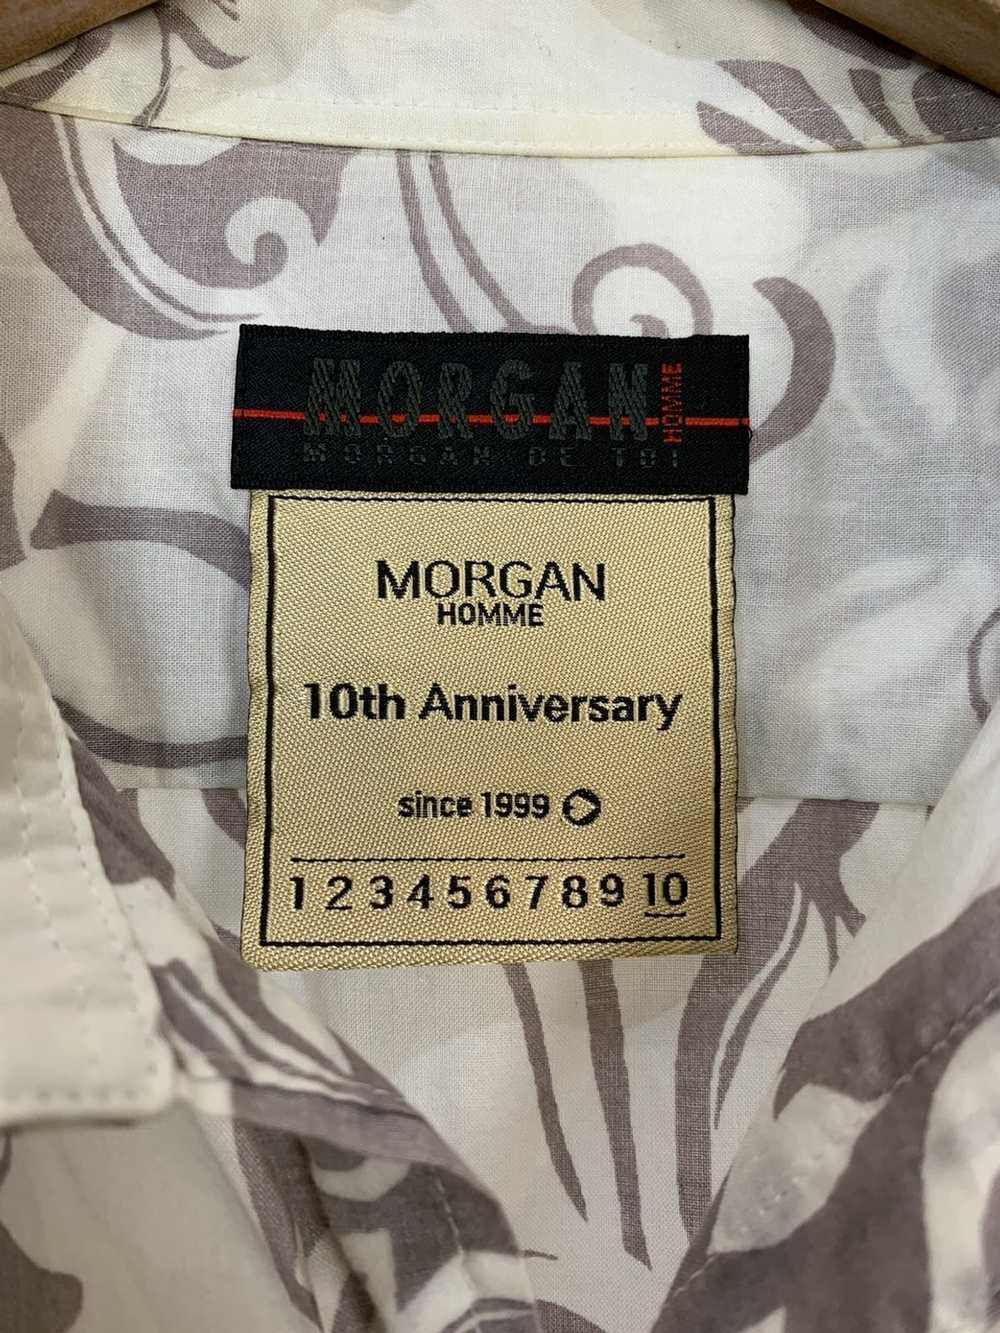 Morgan Homme Morgan Homme Shirt - image 8